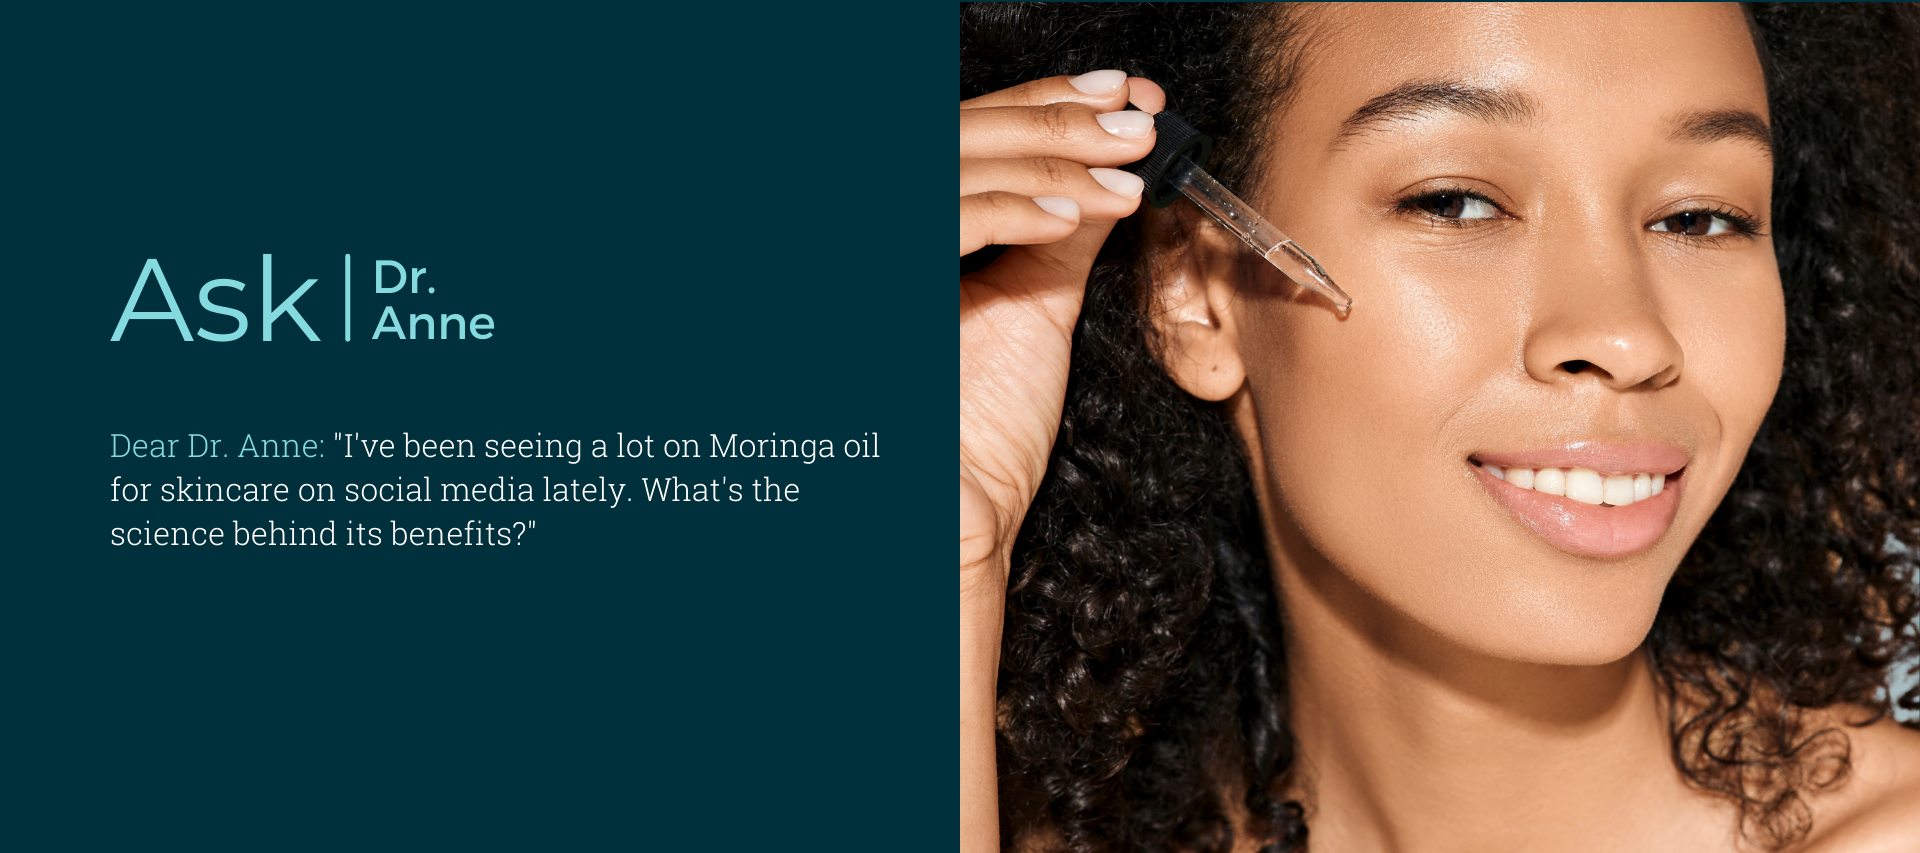 Moringa Oil Skin Benefits